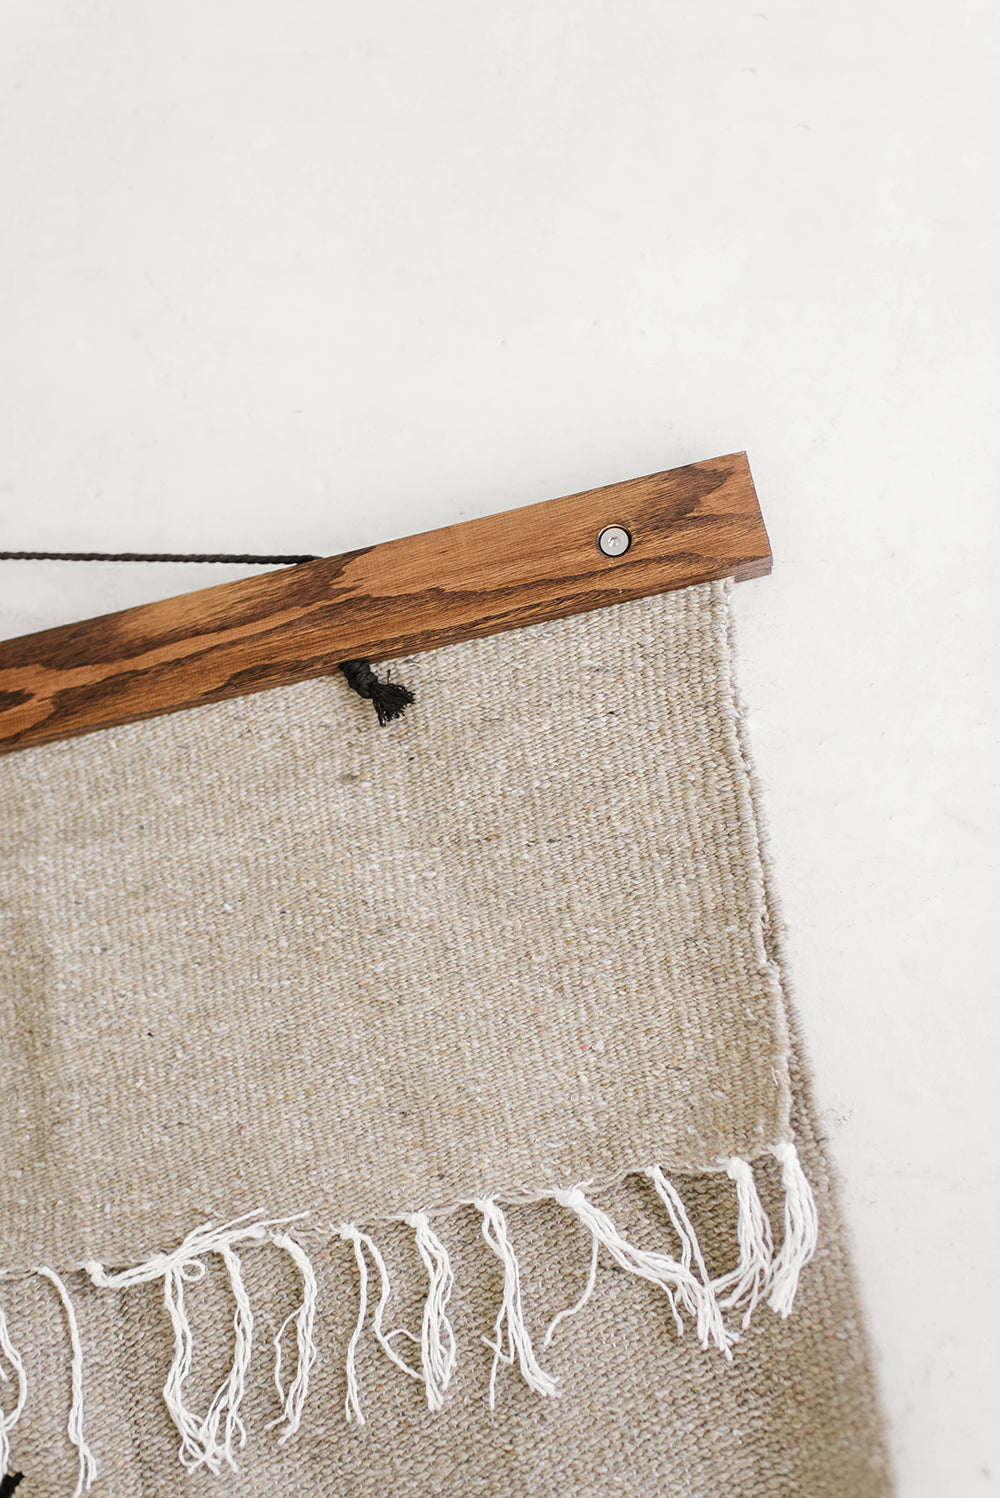 Wooden Quilt Hanger Frame (no more quilt sleeves for dowels) – Quilt Hangers